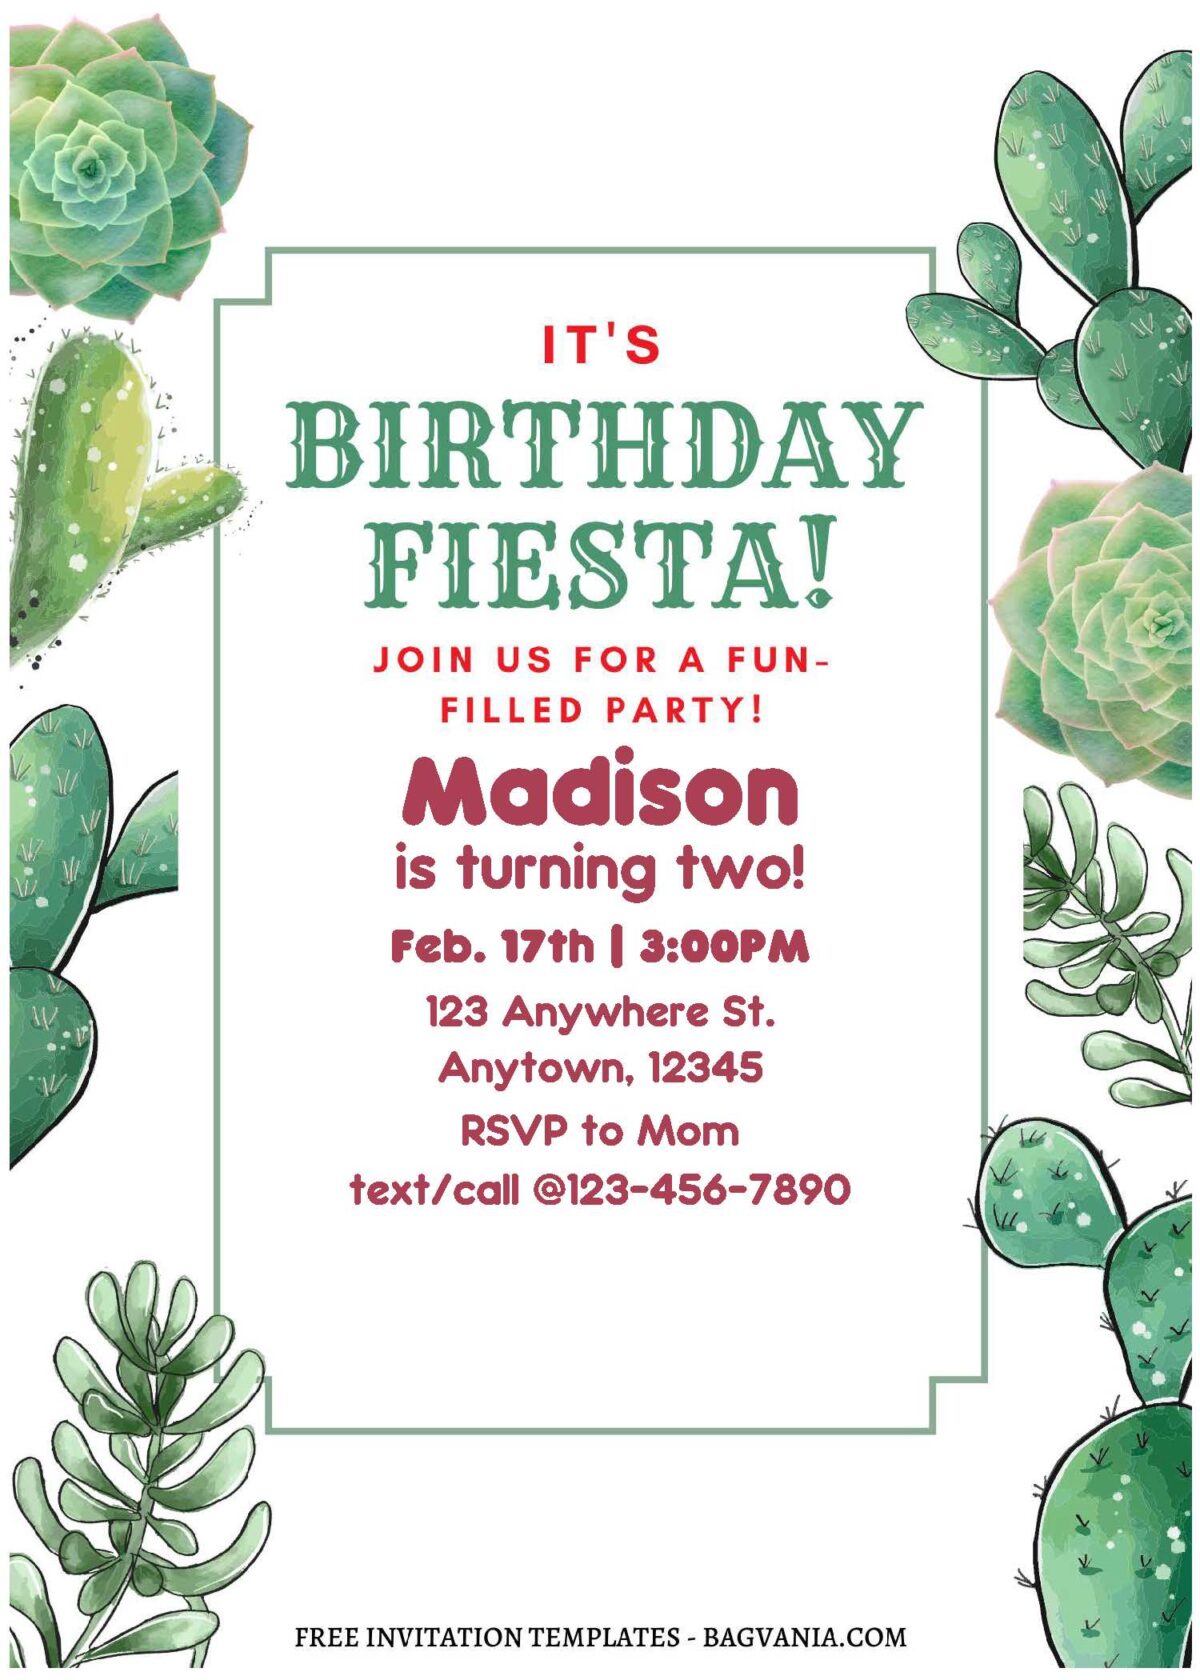 (Free Editable PDF) Birthday Fiesta Cactus Invitation Templates A